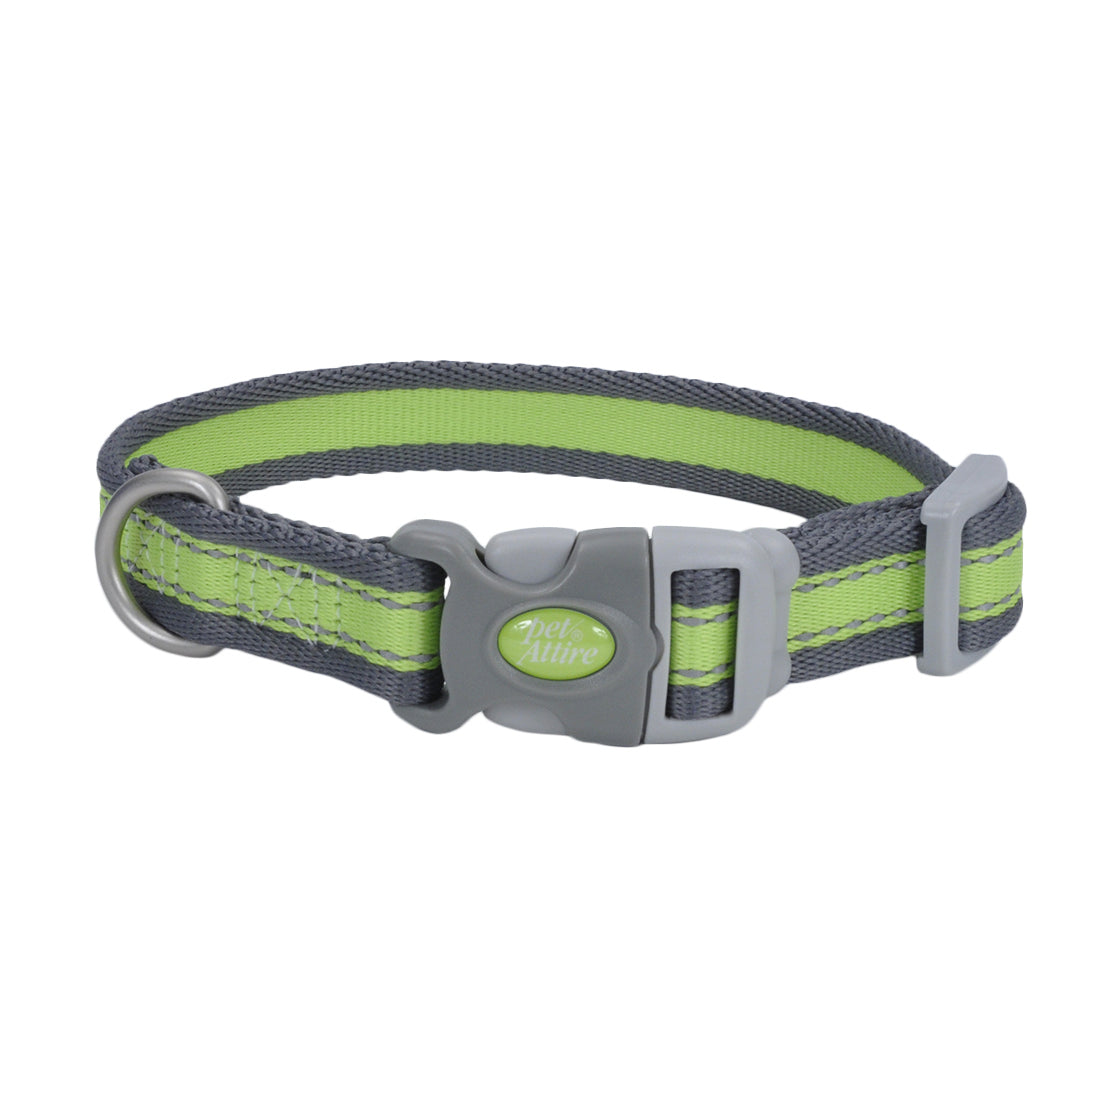 Coastal Pet Attire Pro Adjustable Reflective Collar 18-26" Green with Gray